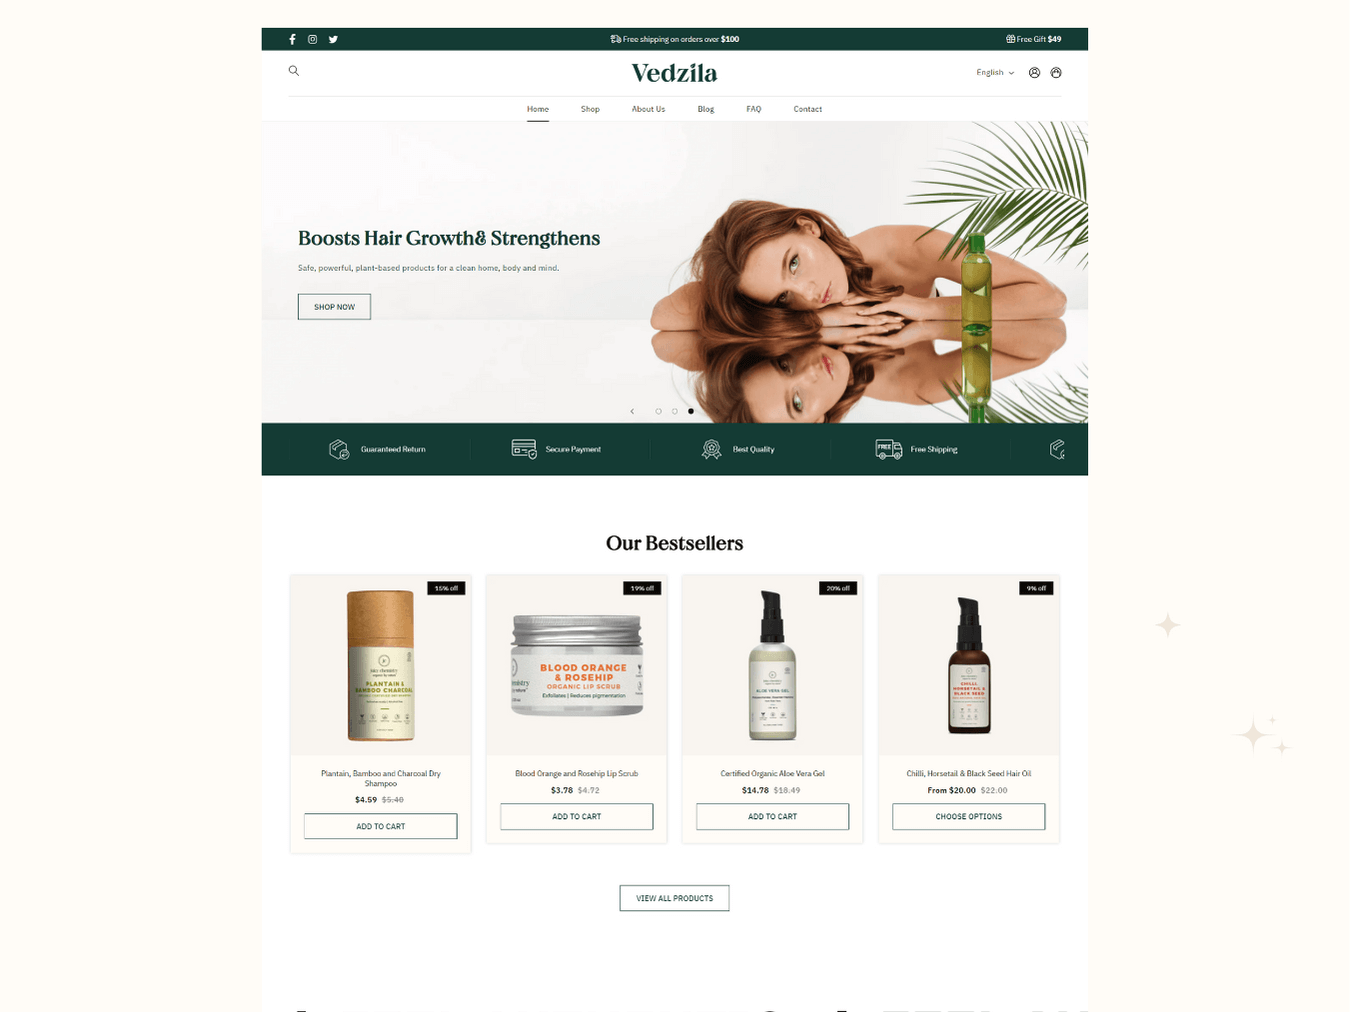 Cosmetic Theme Shopify